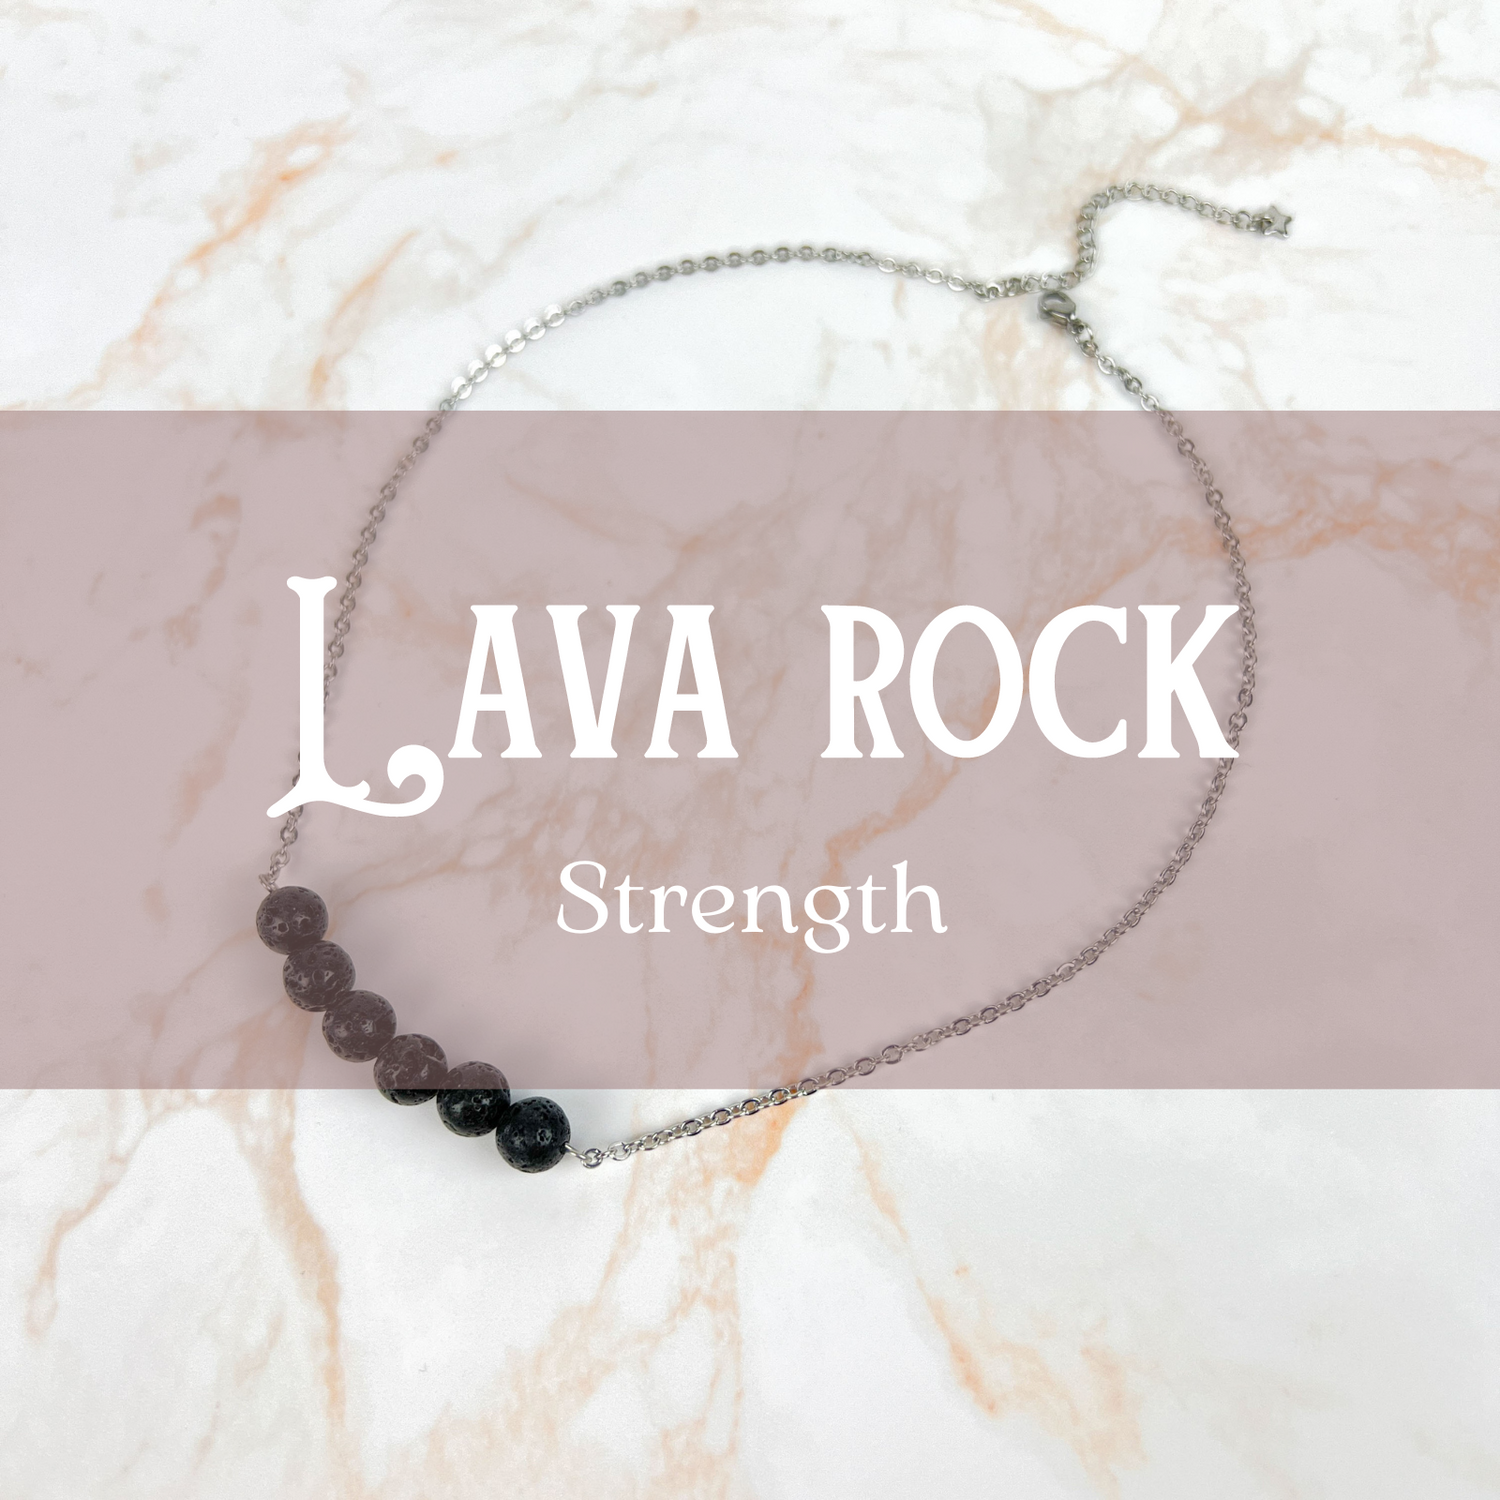 Lava rock jewelry